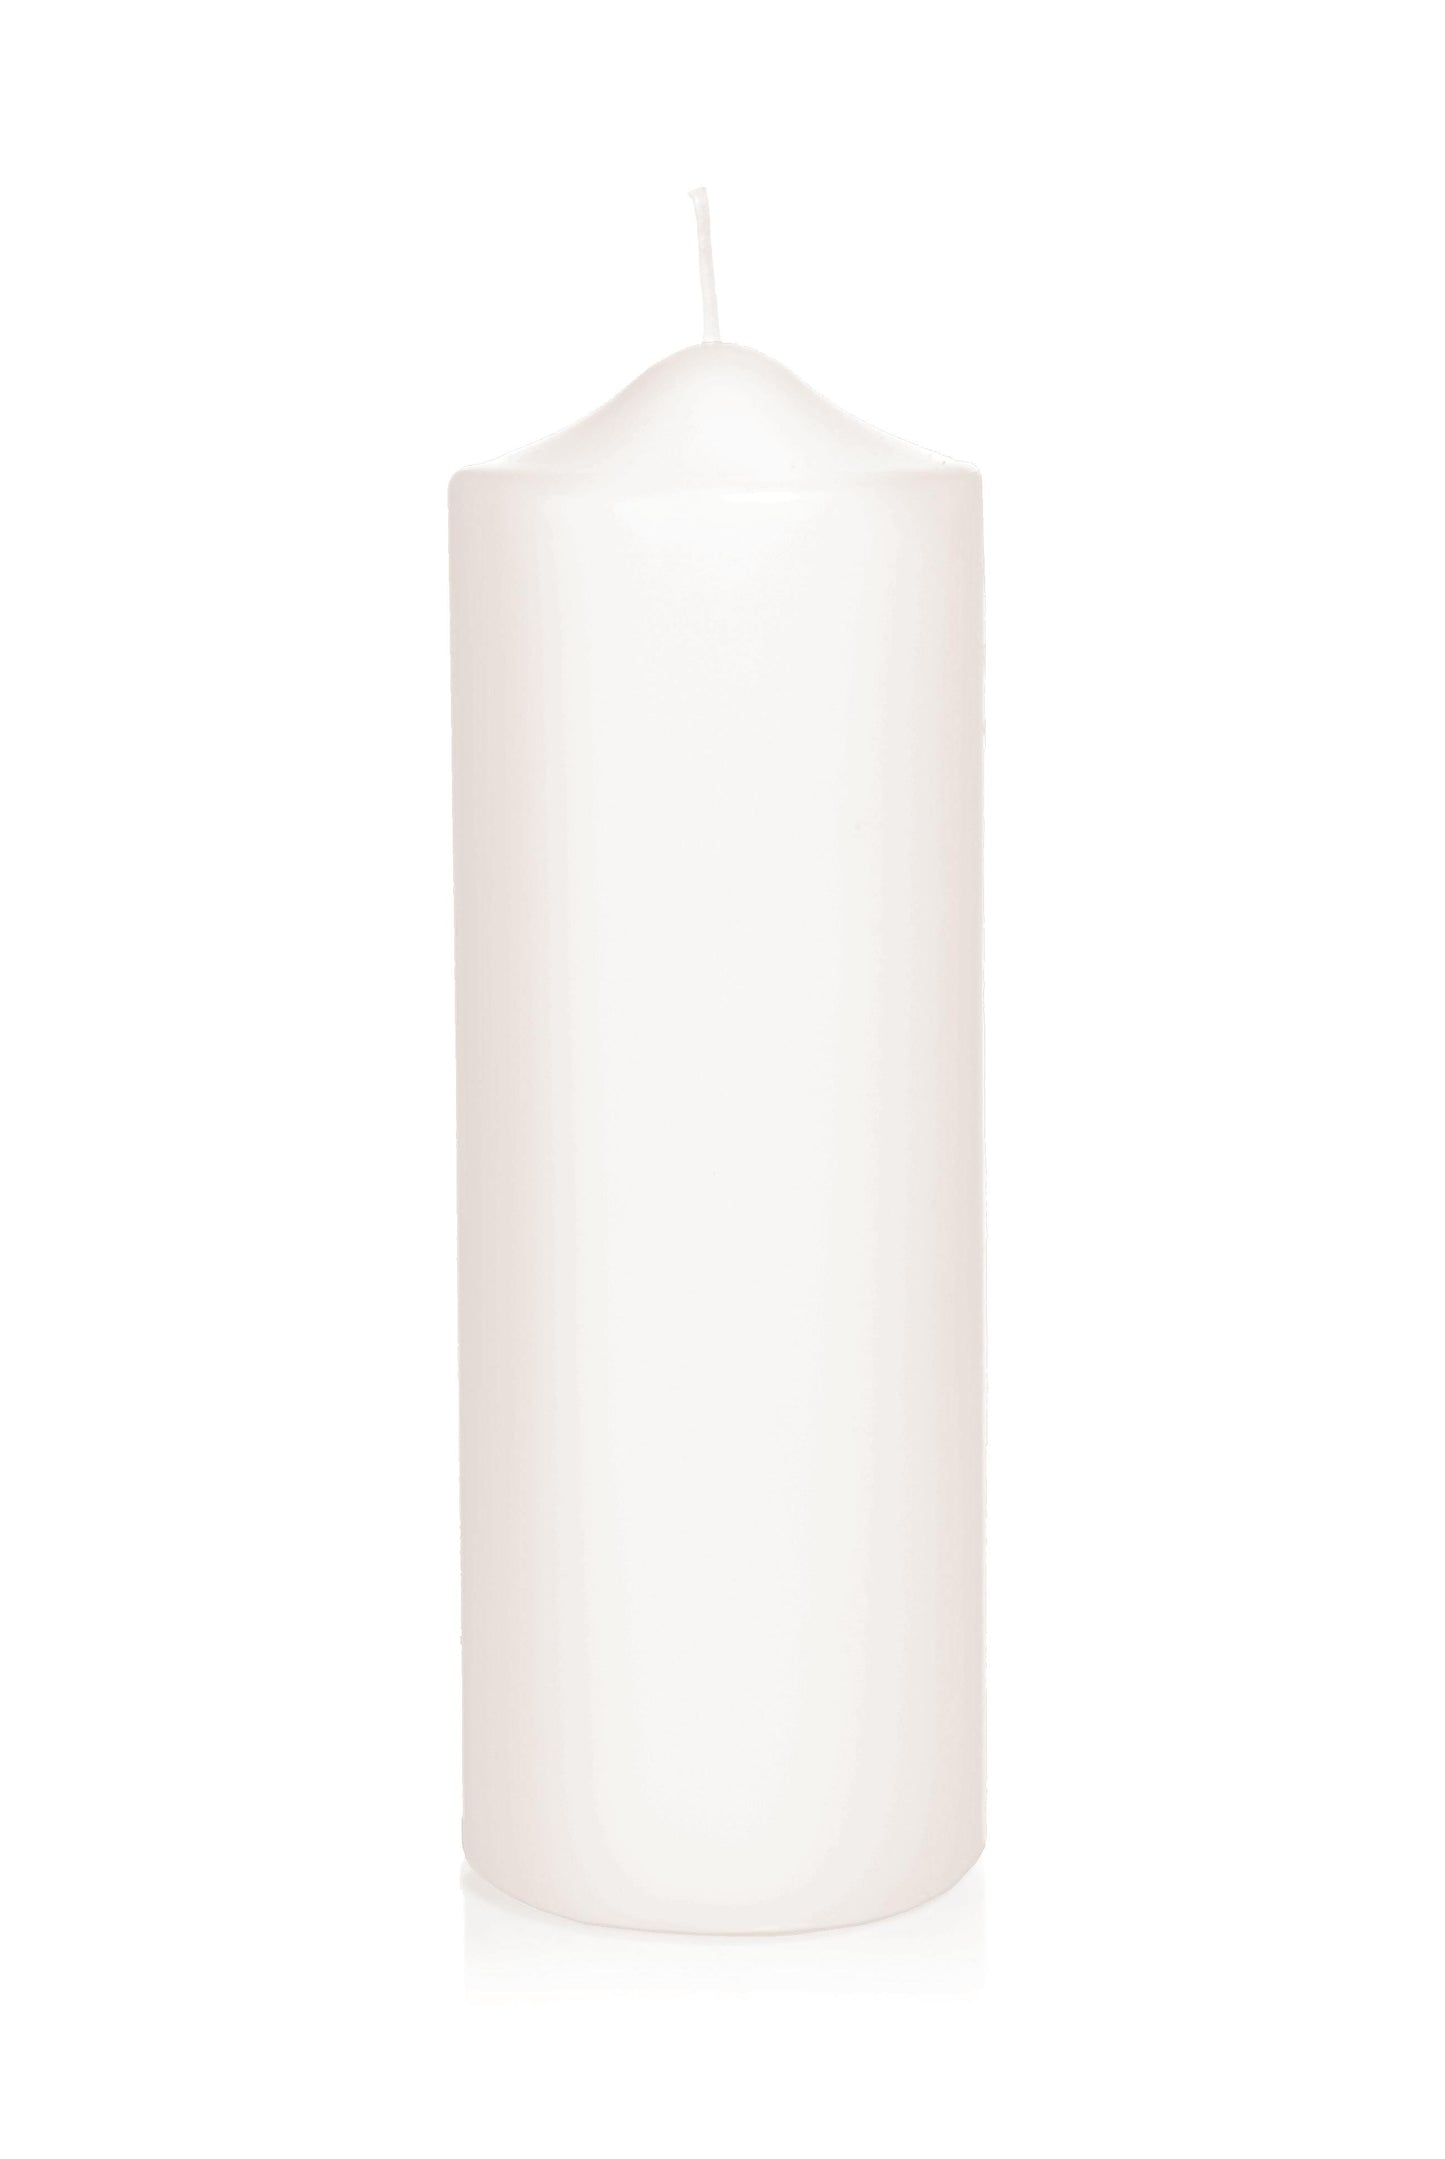 12x Spitzkopfstumpenkerzen in Cellophan 200/70mm (Weiß)